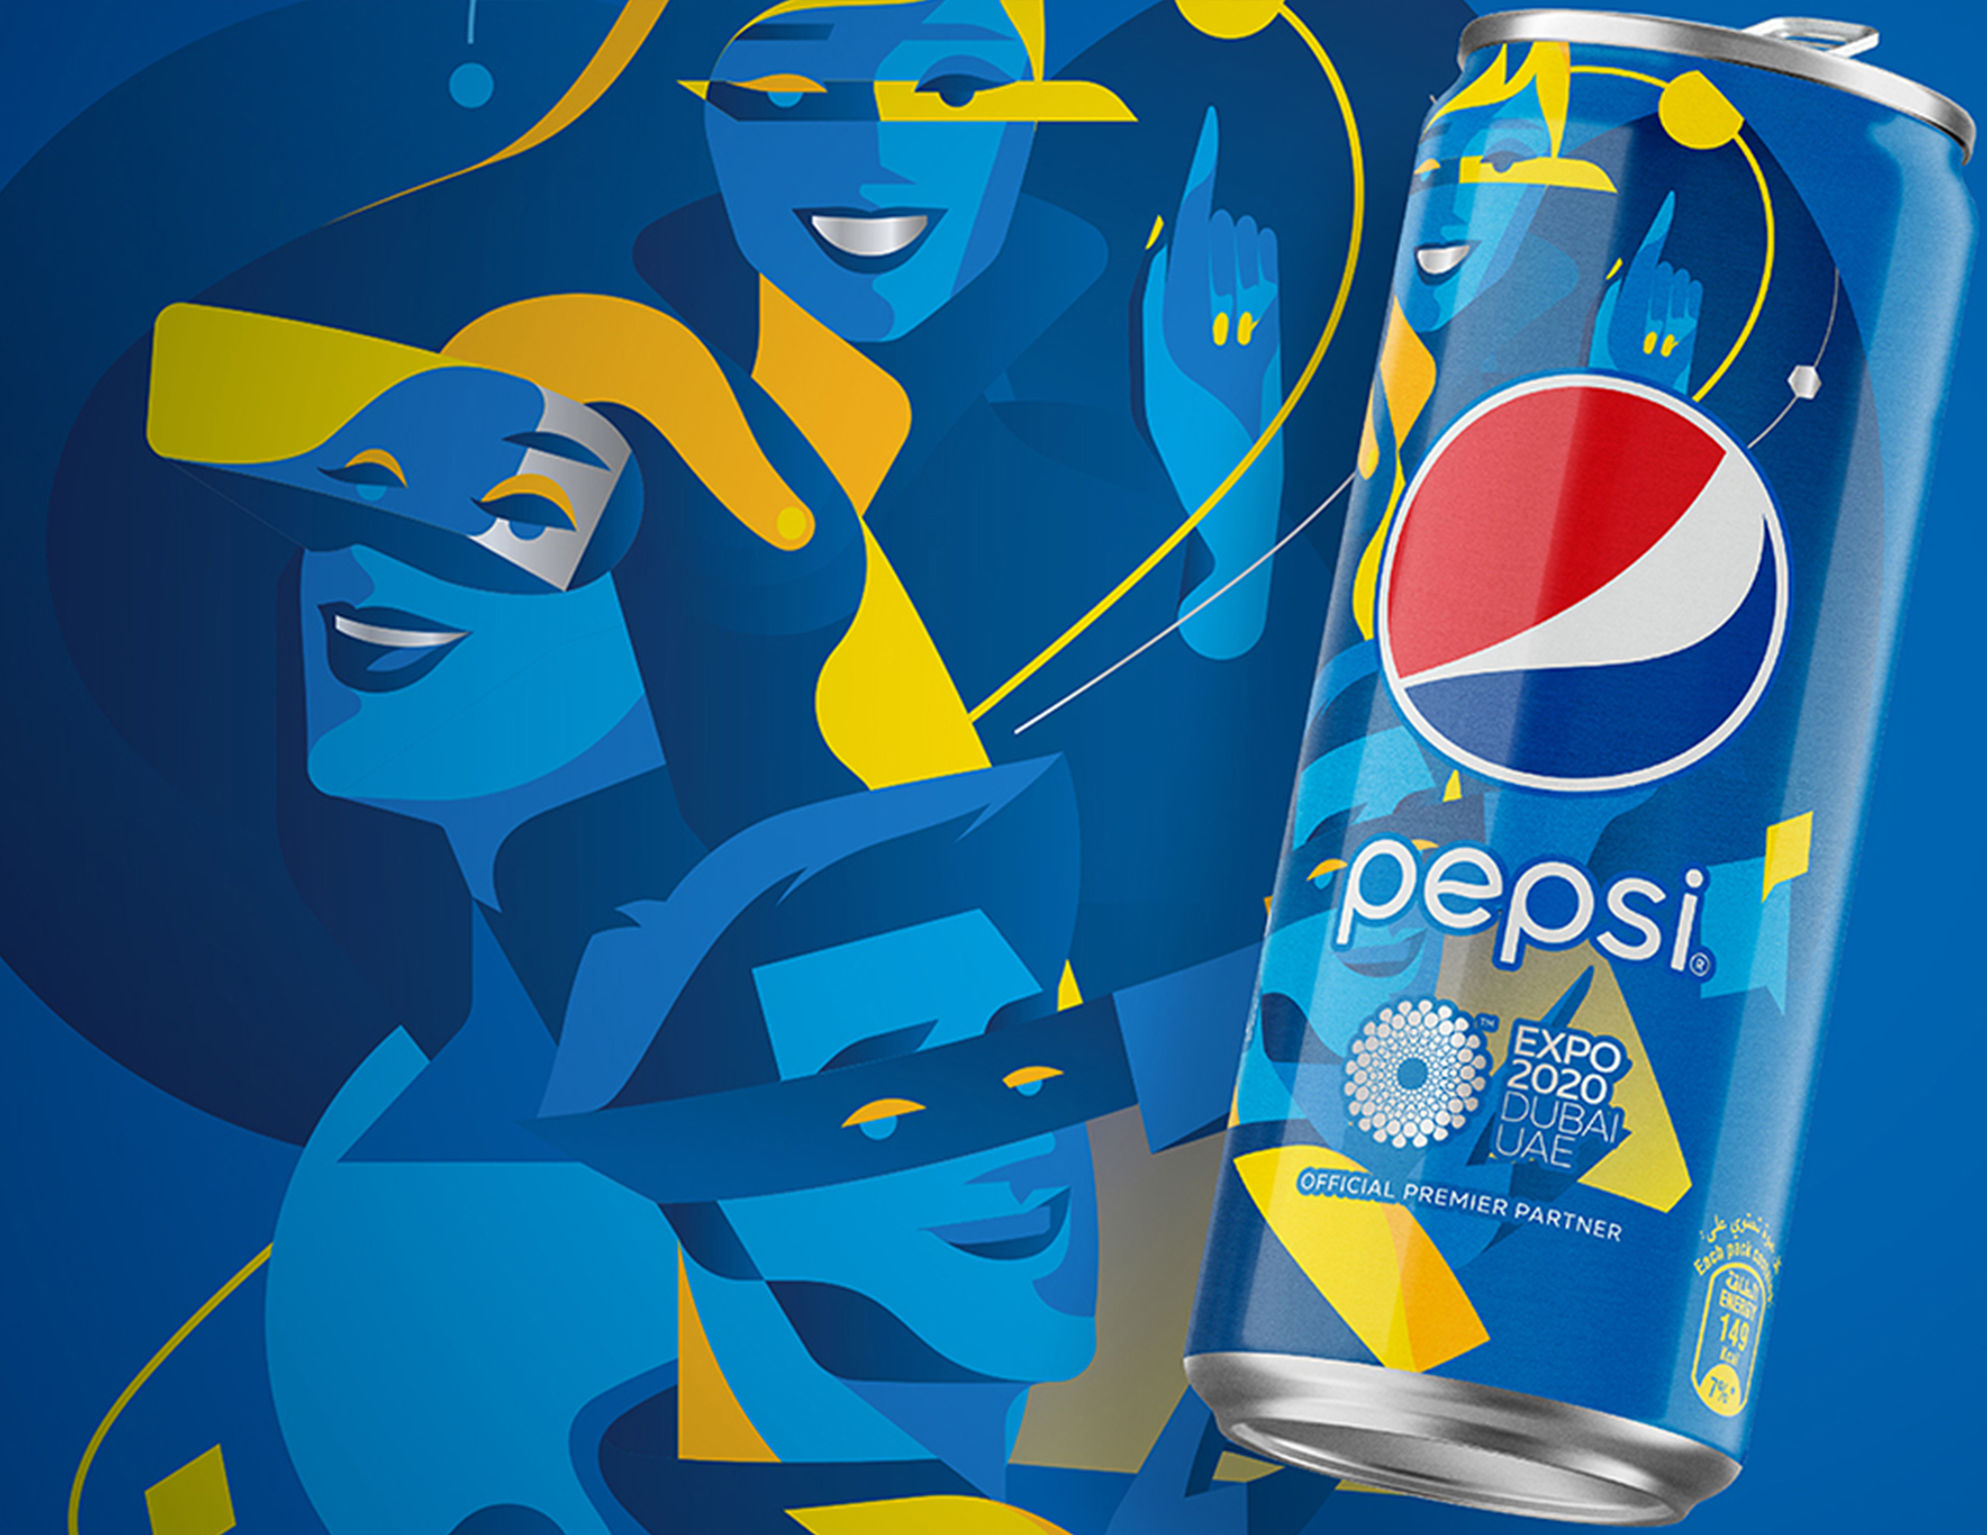 Pepsi x EXPO 2020 (GCR)